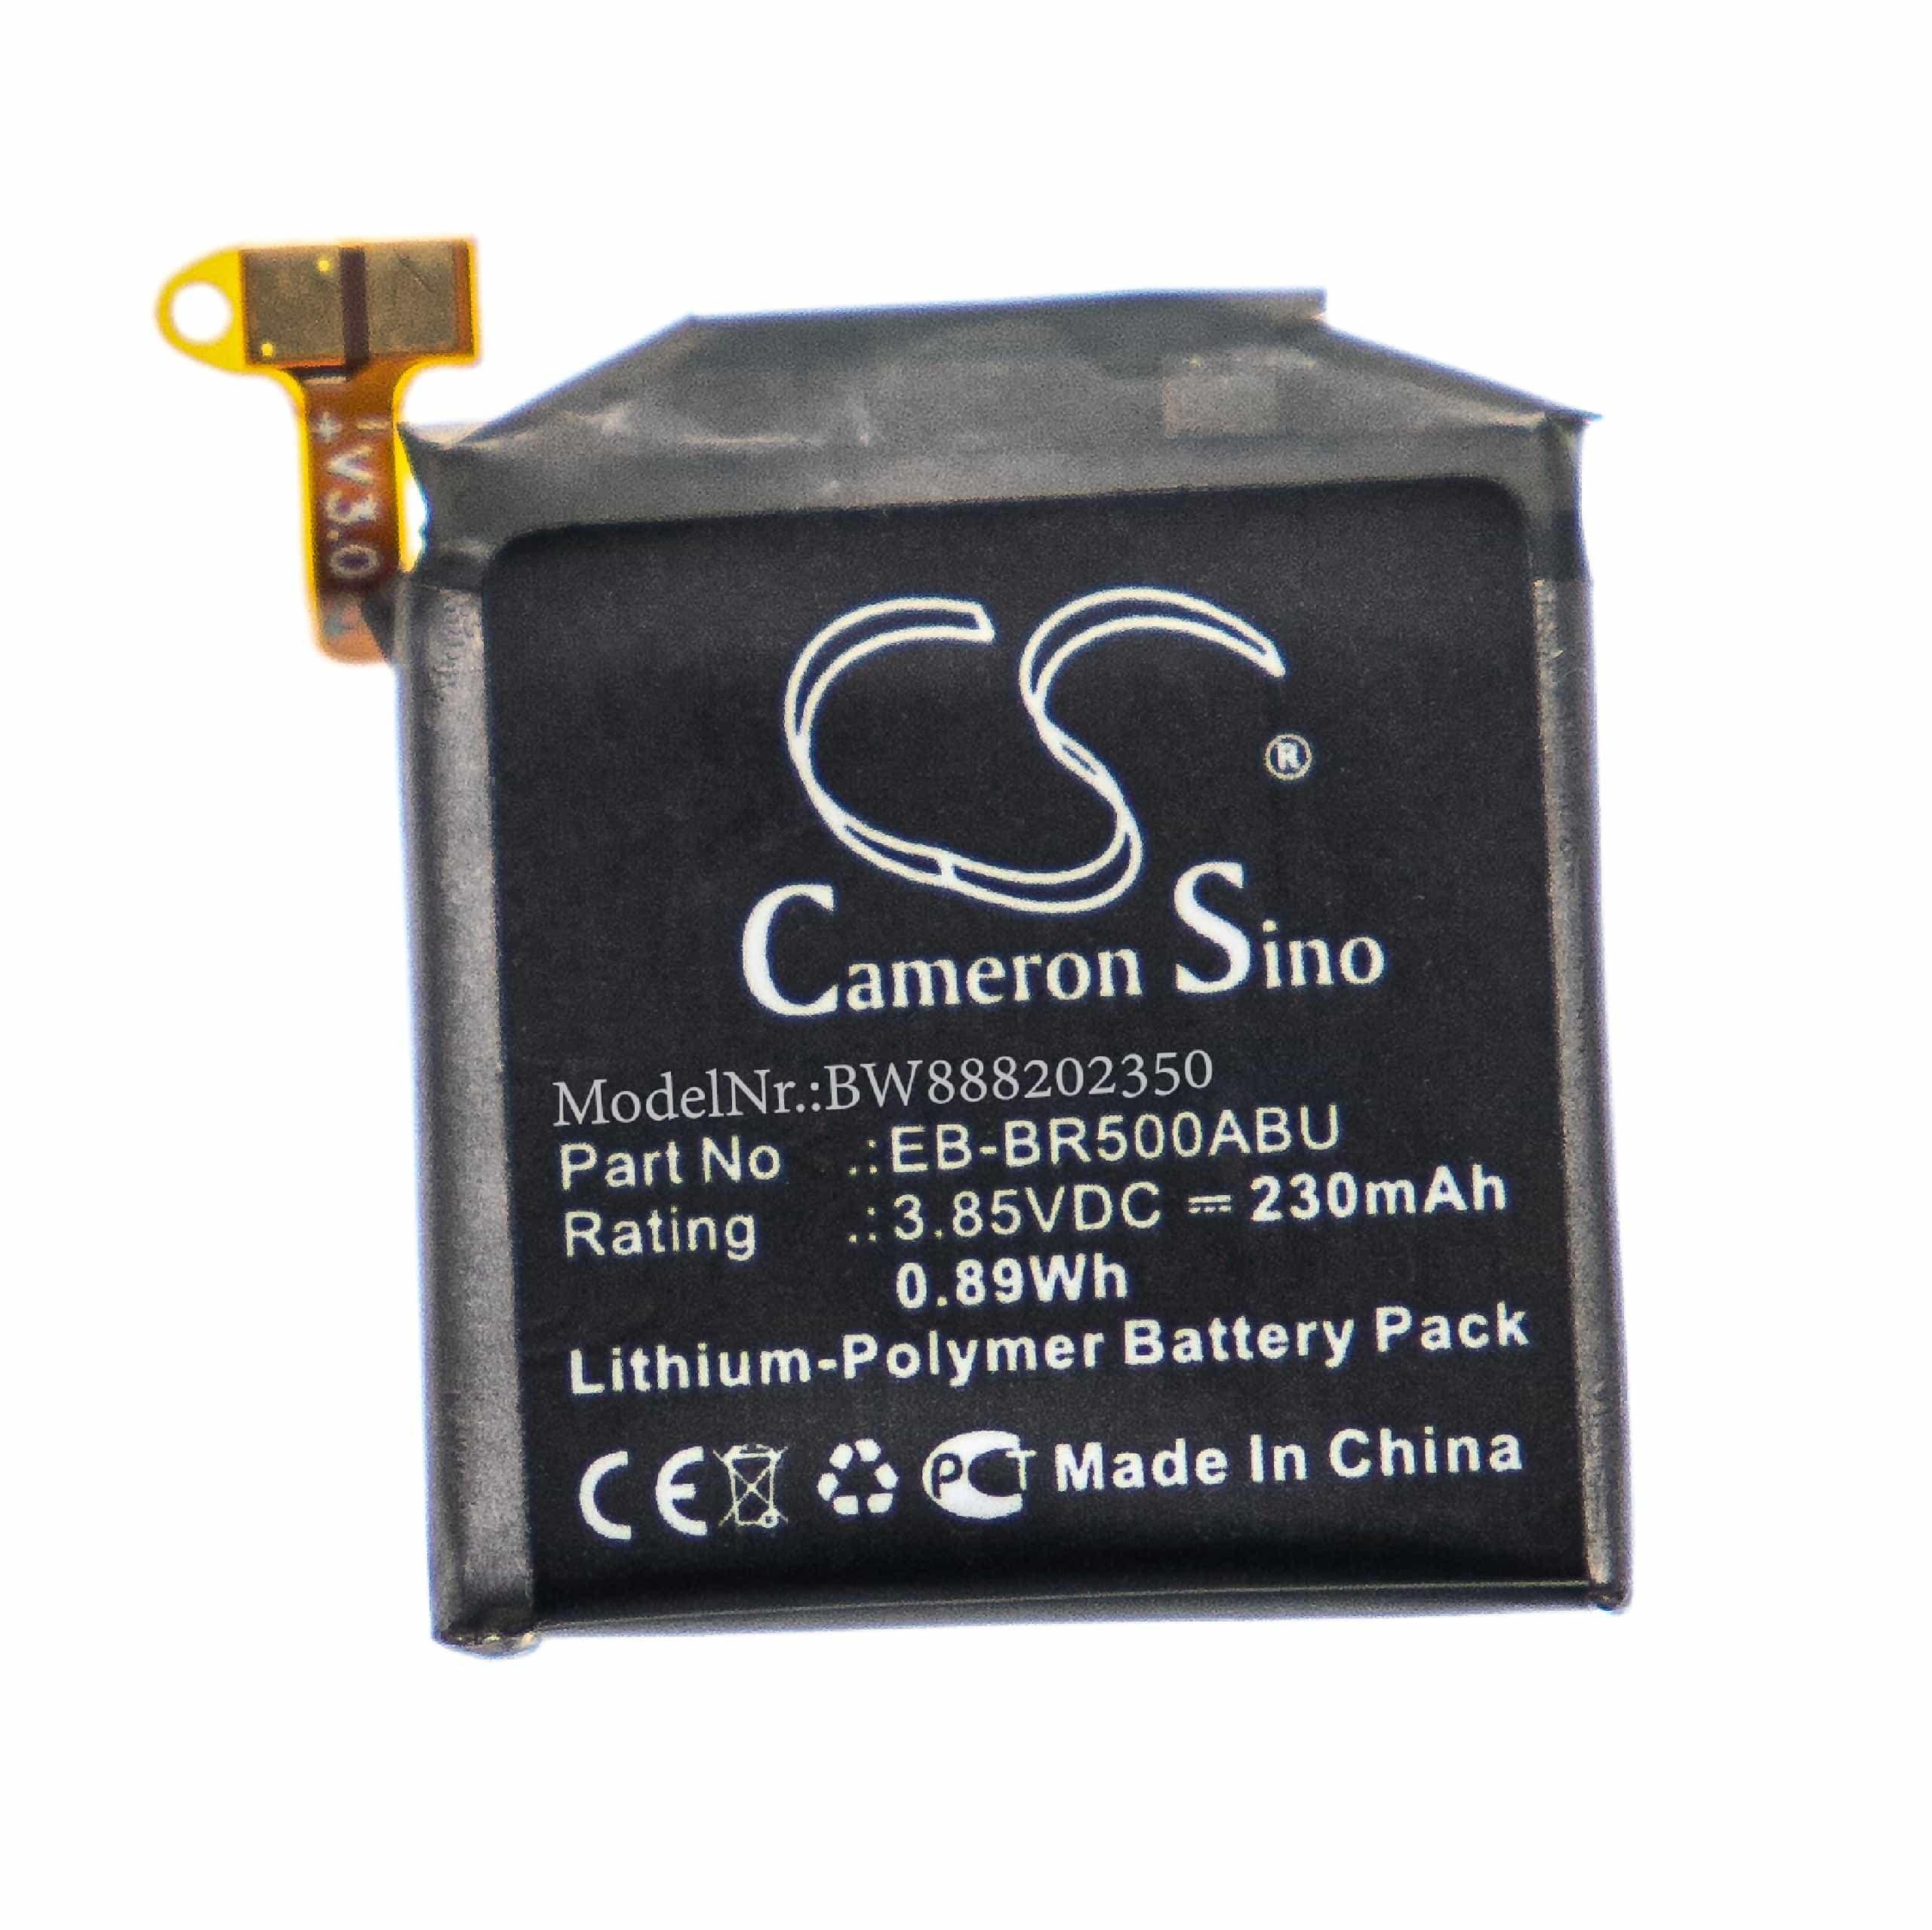 Smartwatch Battery Replacement for Samsung GH43-04922A, EB-BR500ABU - 230mAh 3.85V Li-polymer